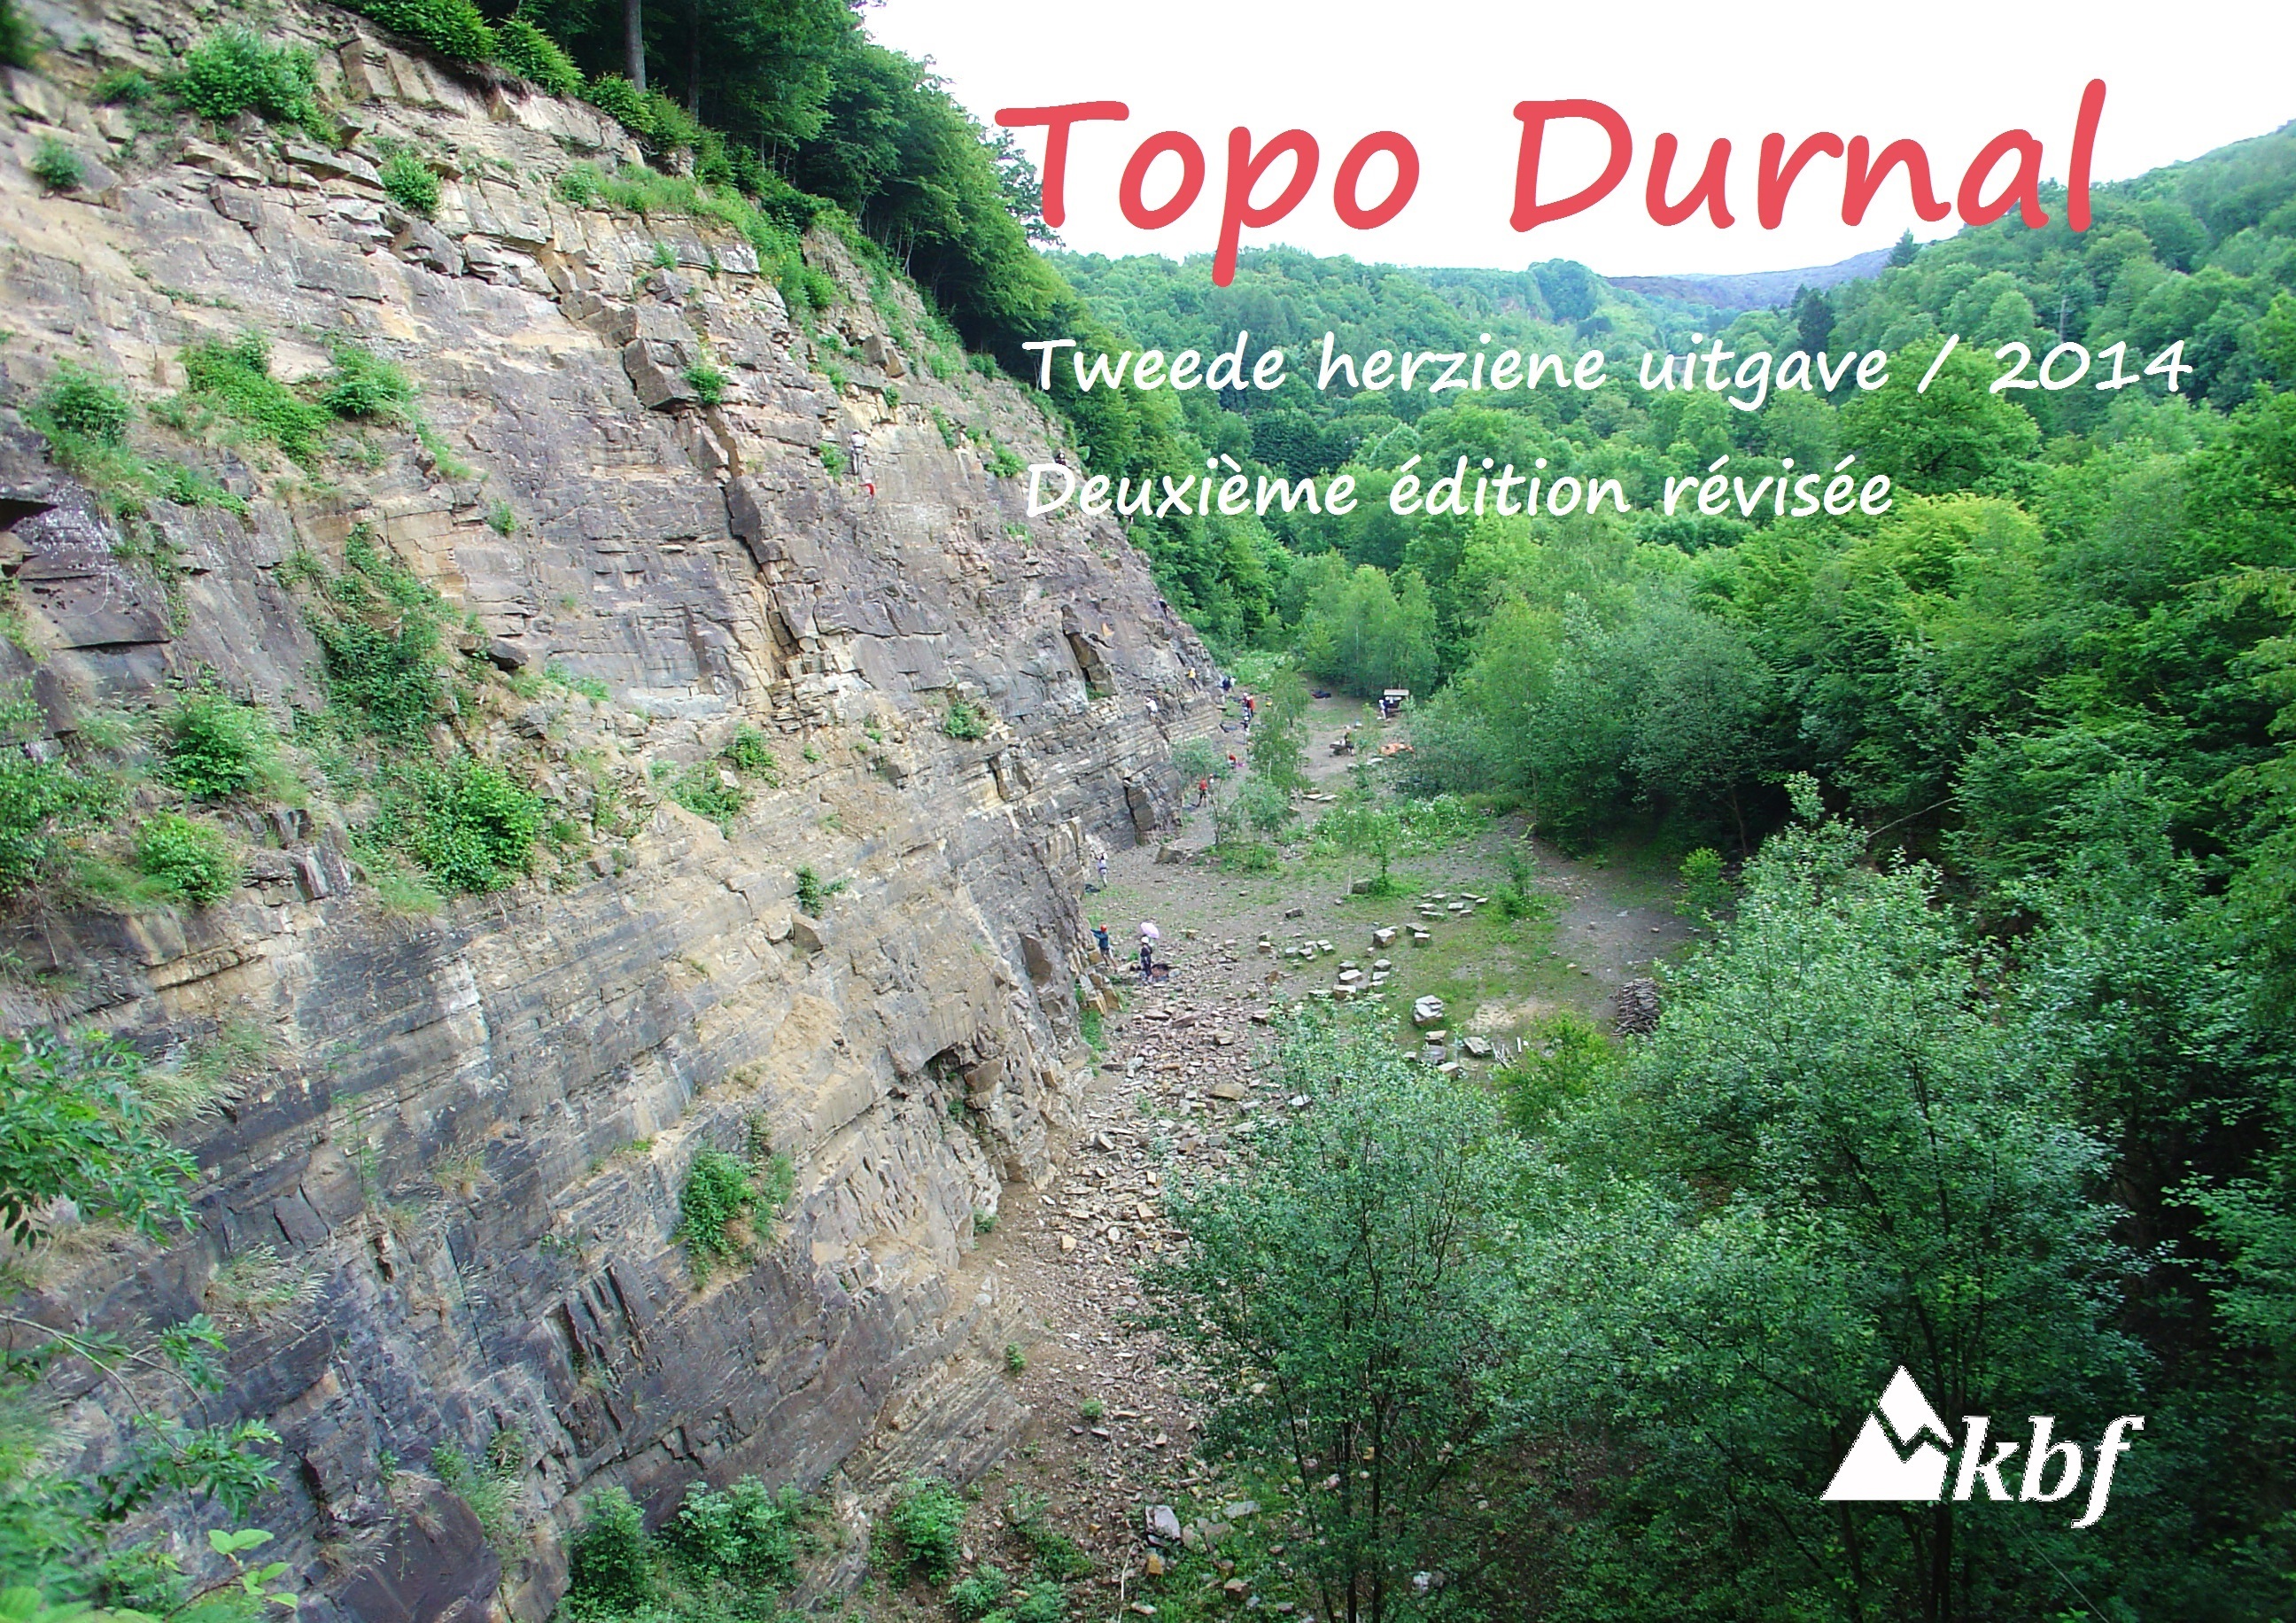 Topo Durnal editie 2014